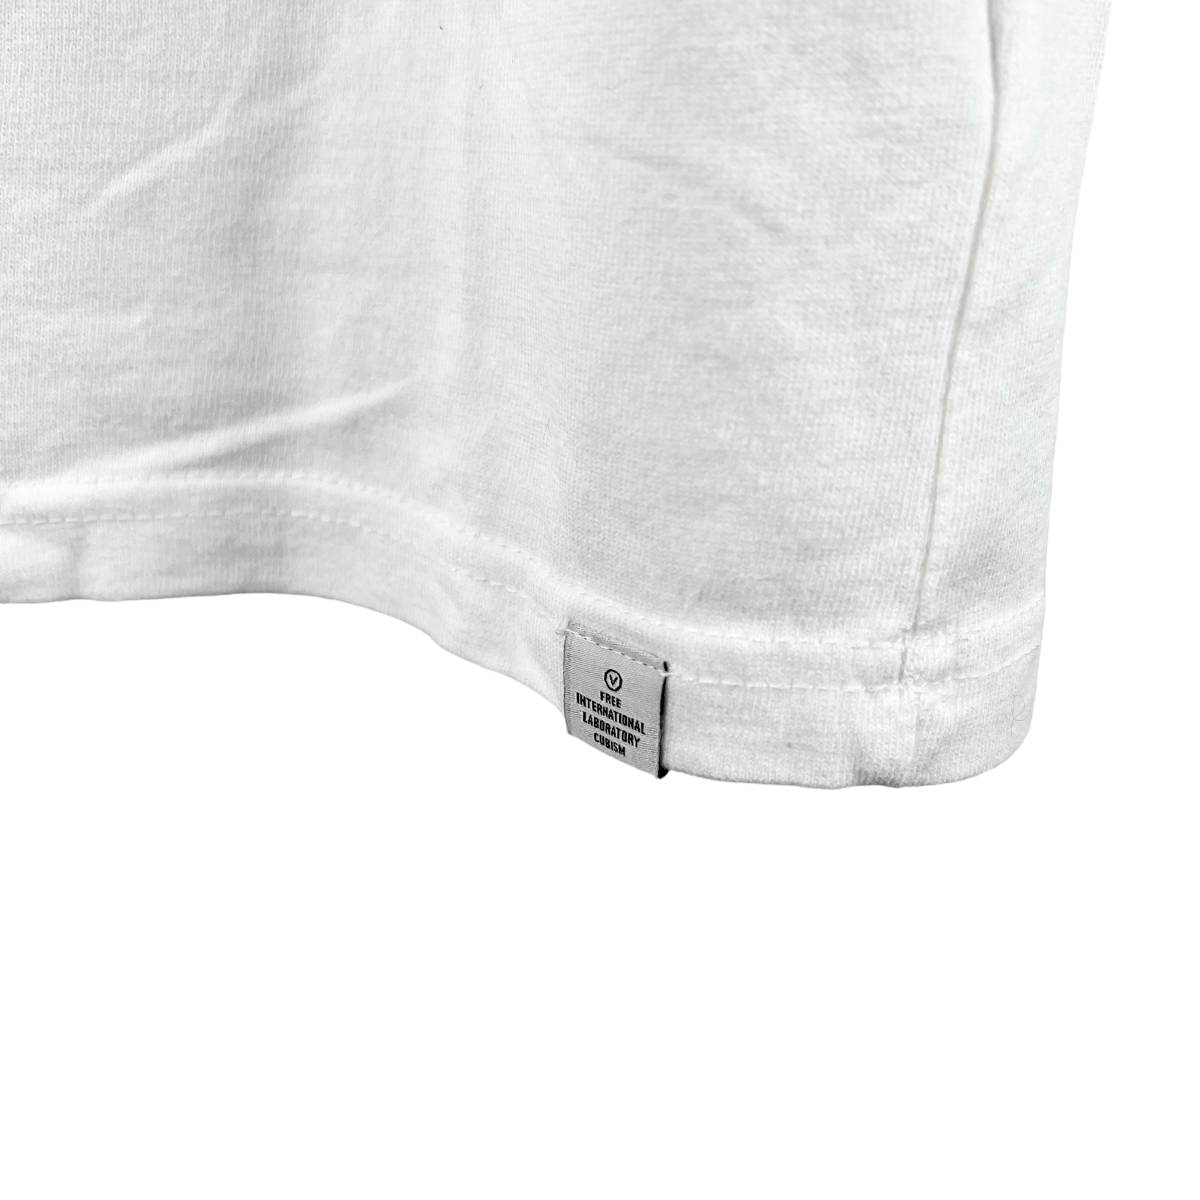 VISVIM(ビズビム) Circle VSVM 260 T Shirt (white)